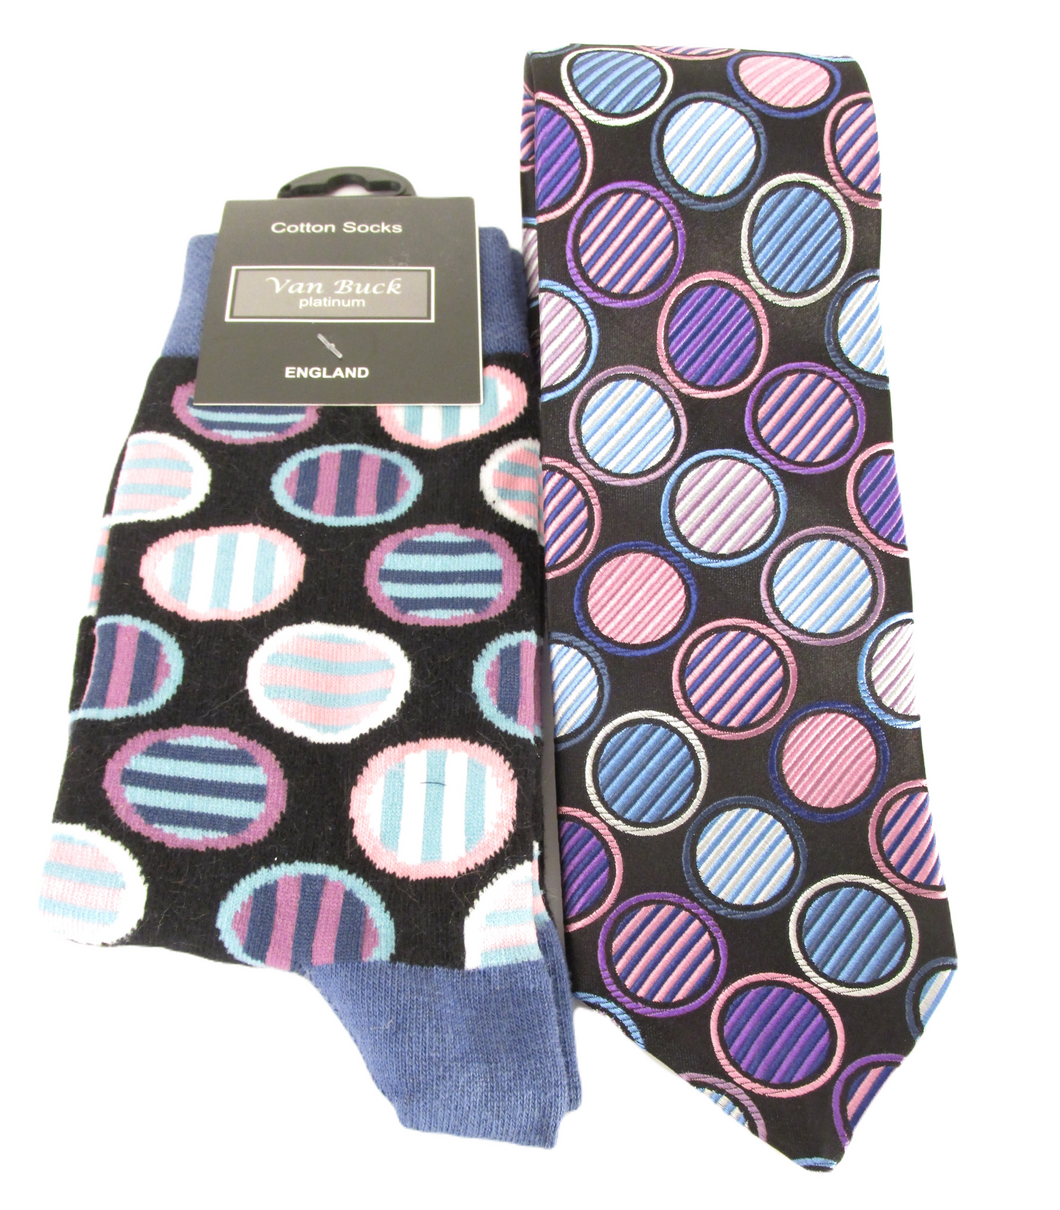 Van Buck Limited Edition Pink & Blue Circles Silk Tie & Socks Gift Set